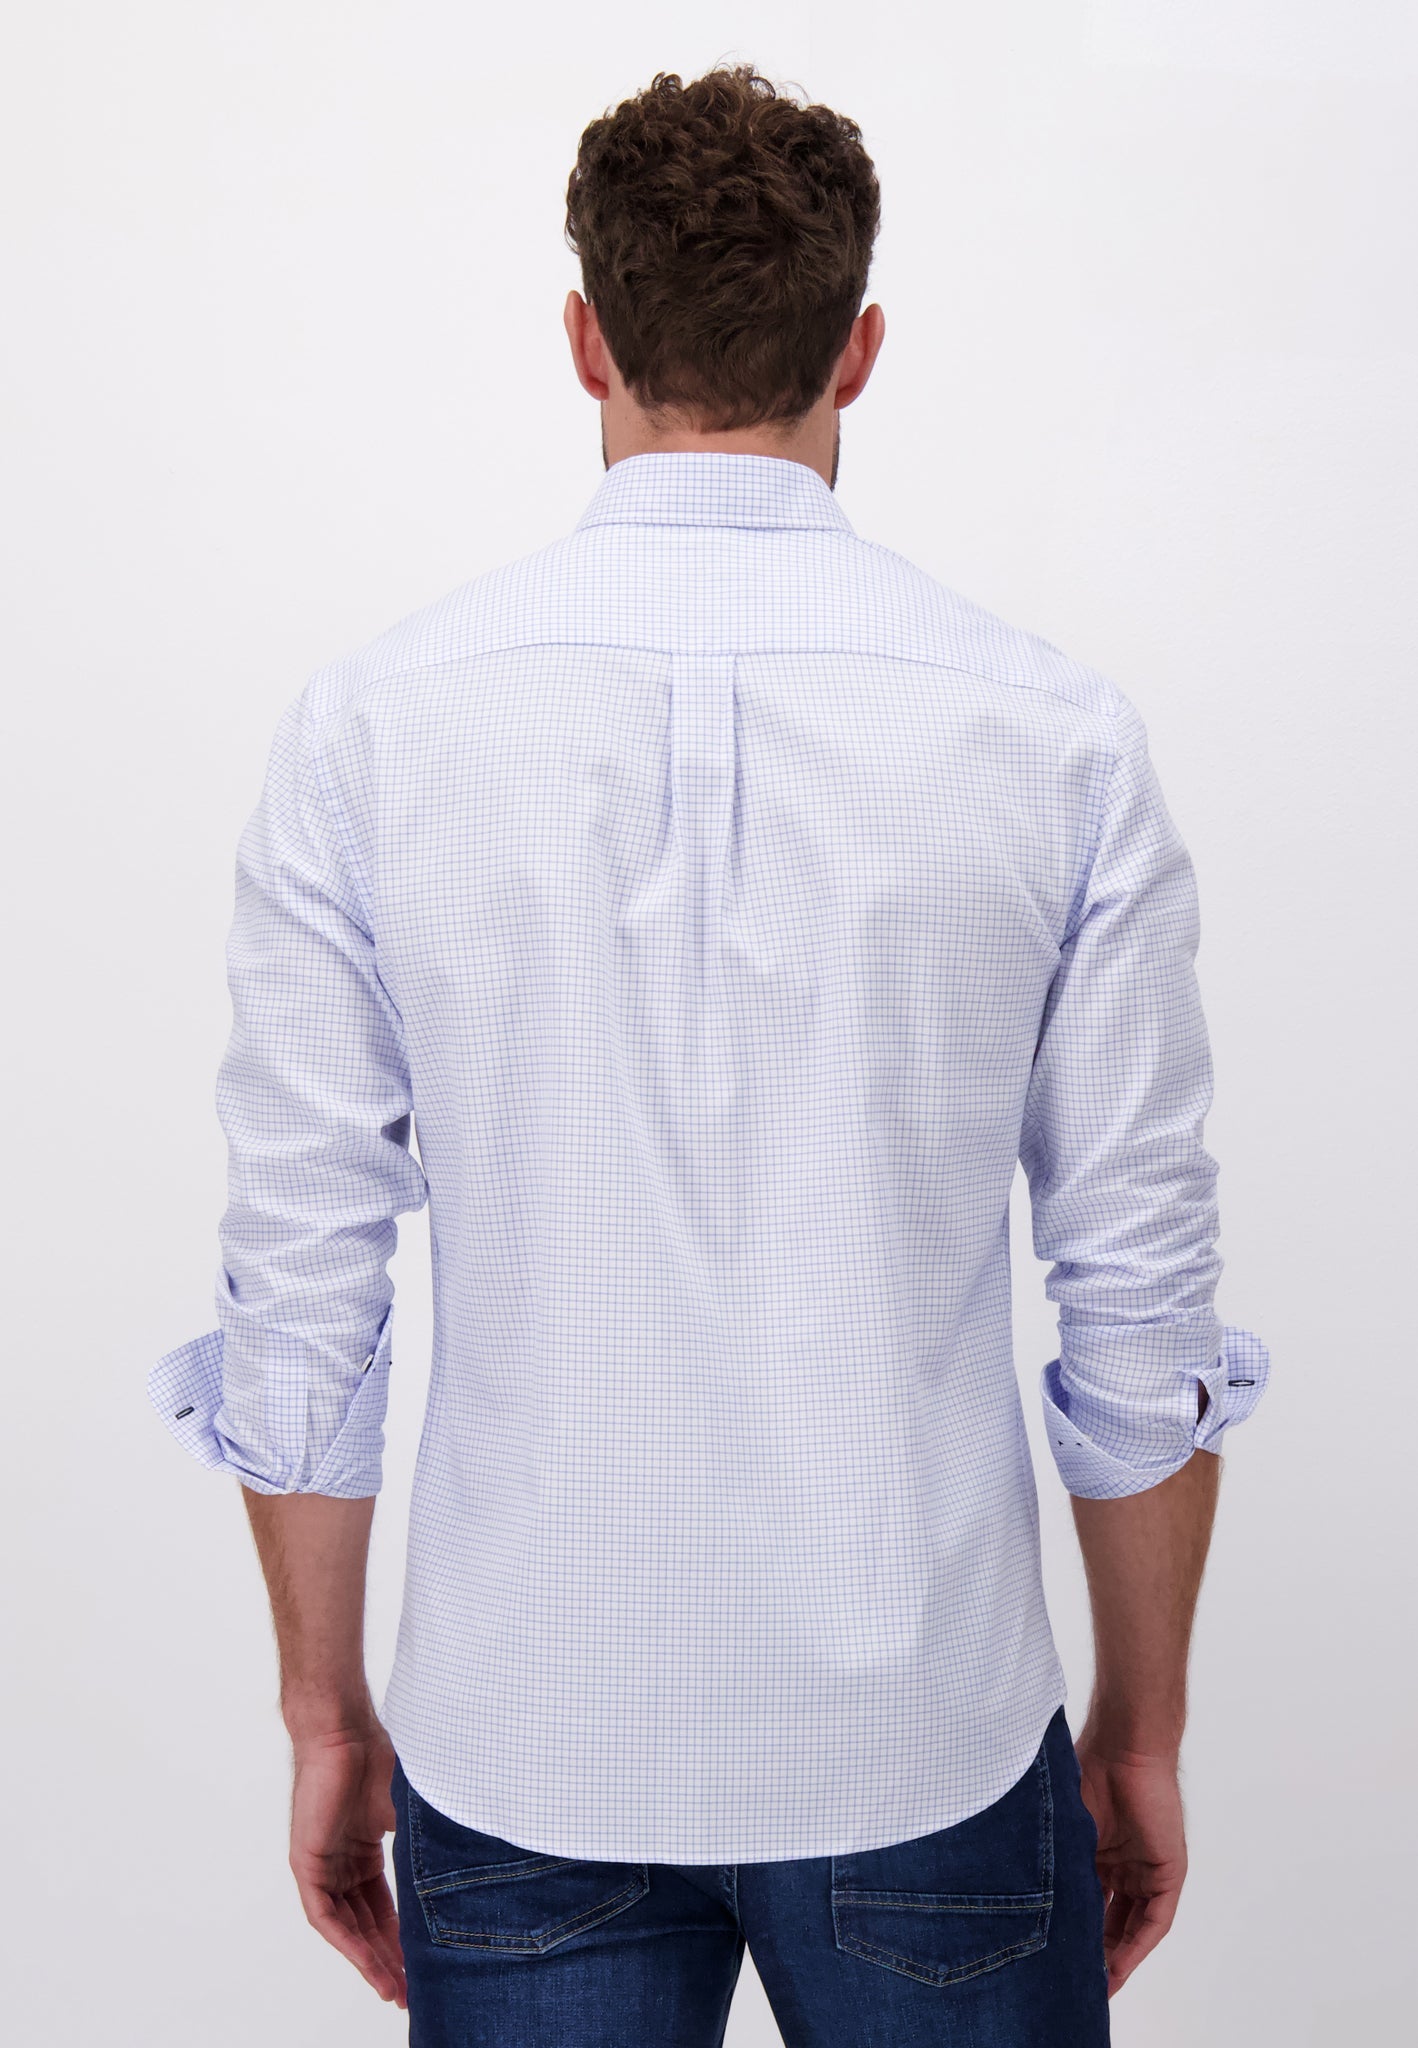 Fynch Hatton, The All Season Oxford Shirt, Long Sleeve, Button Down